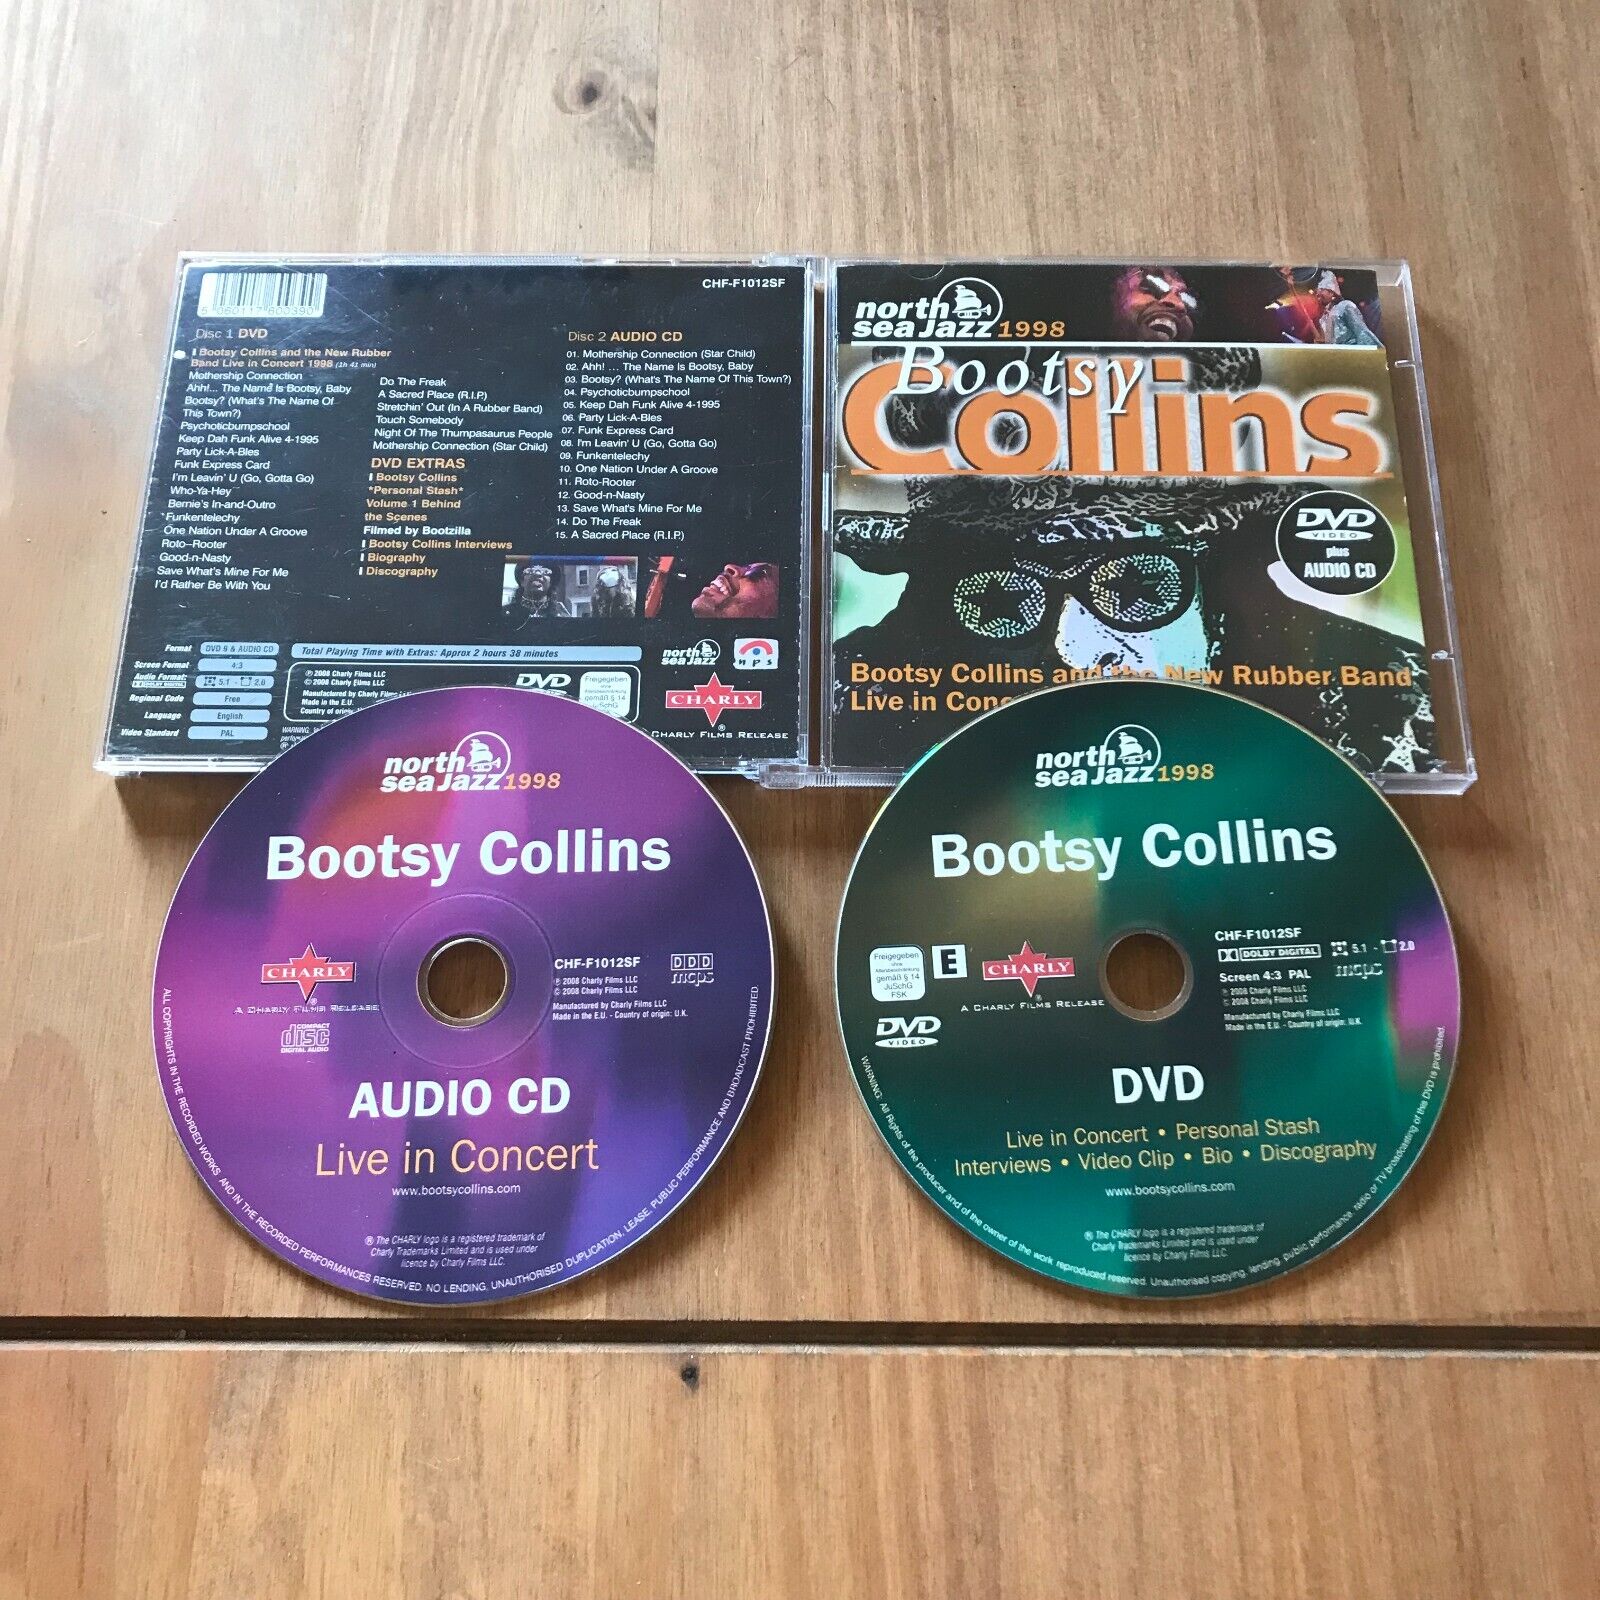 BOOTSY COLLINS - NOTH SEA JAZZ FESTIVAL 1988 (2009 CD ALBUM + DVD)